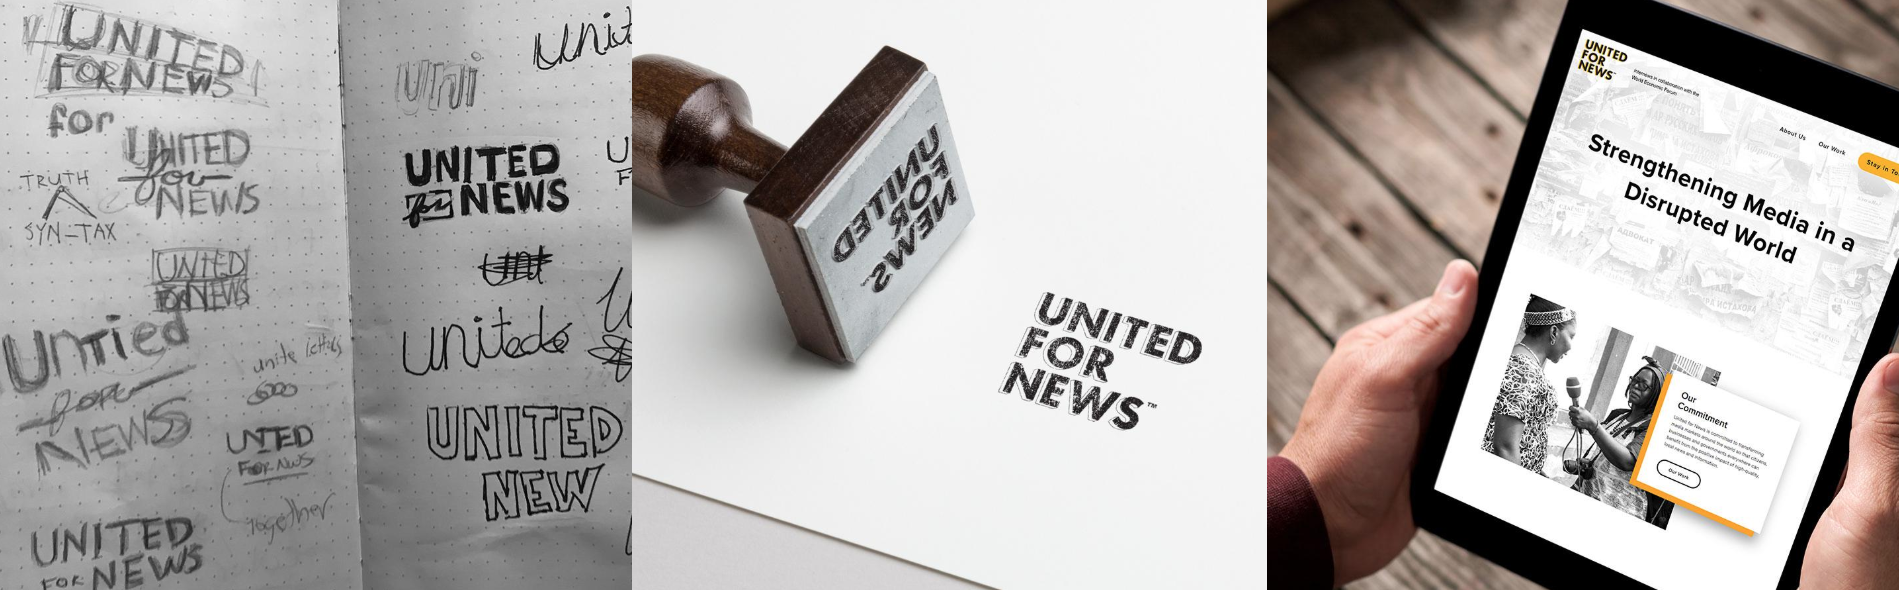 United for News website